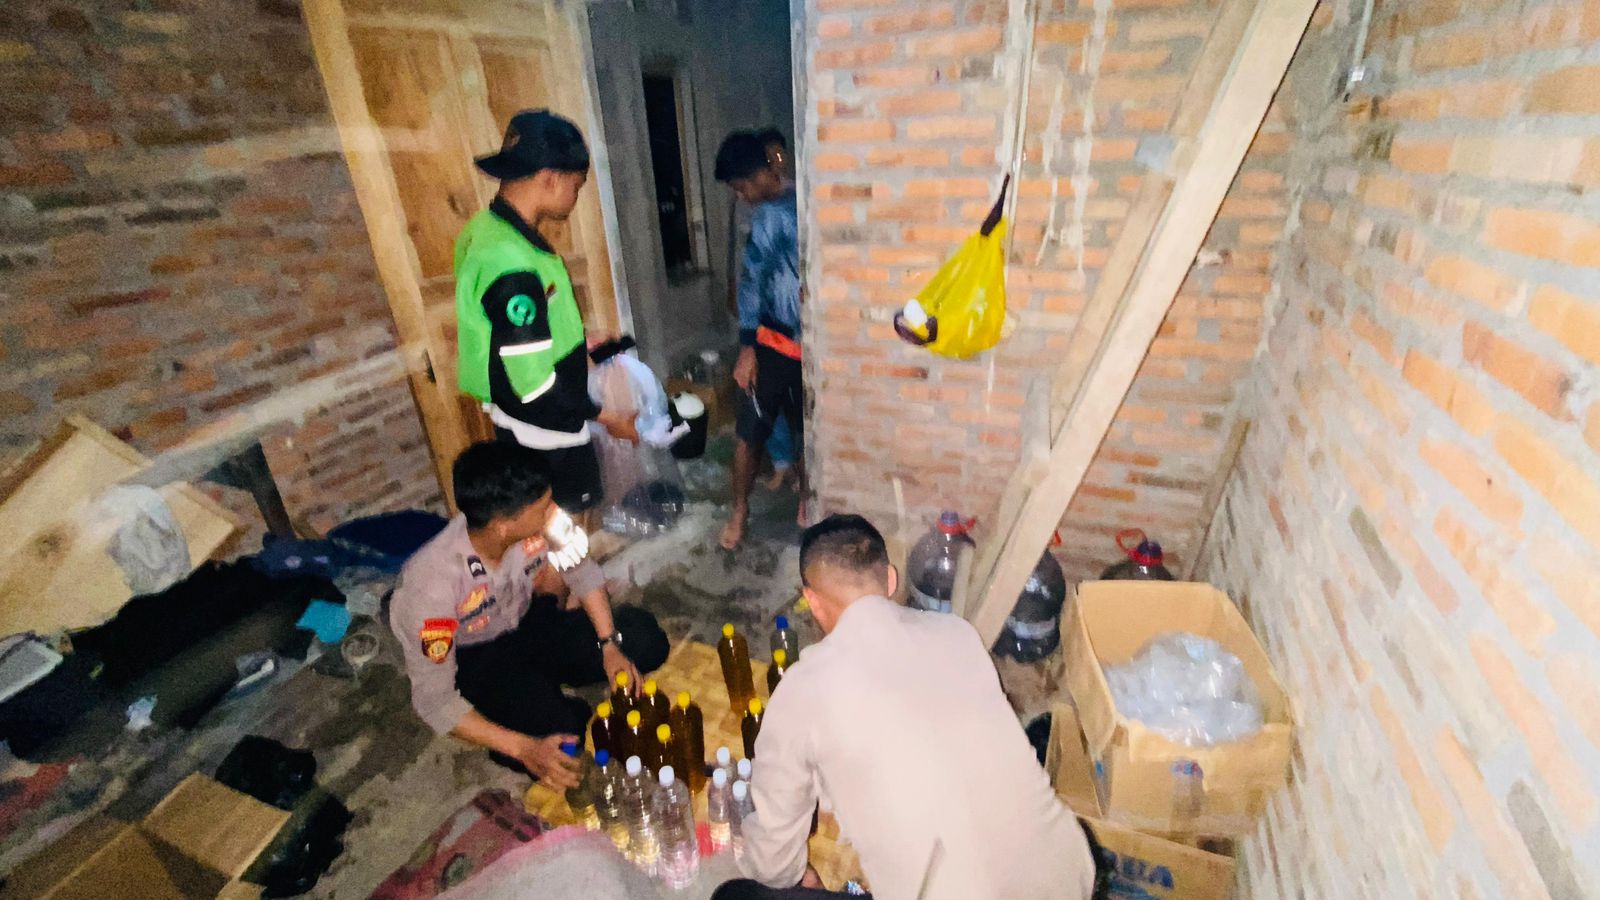 Sat Samapta Polresta Magelang Amankan Puluhan Botol Miras di 4 Lokasi Muntilan